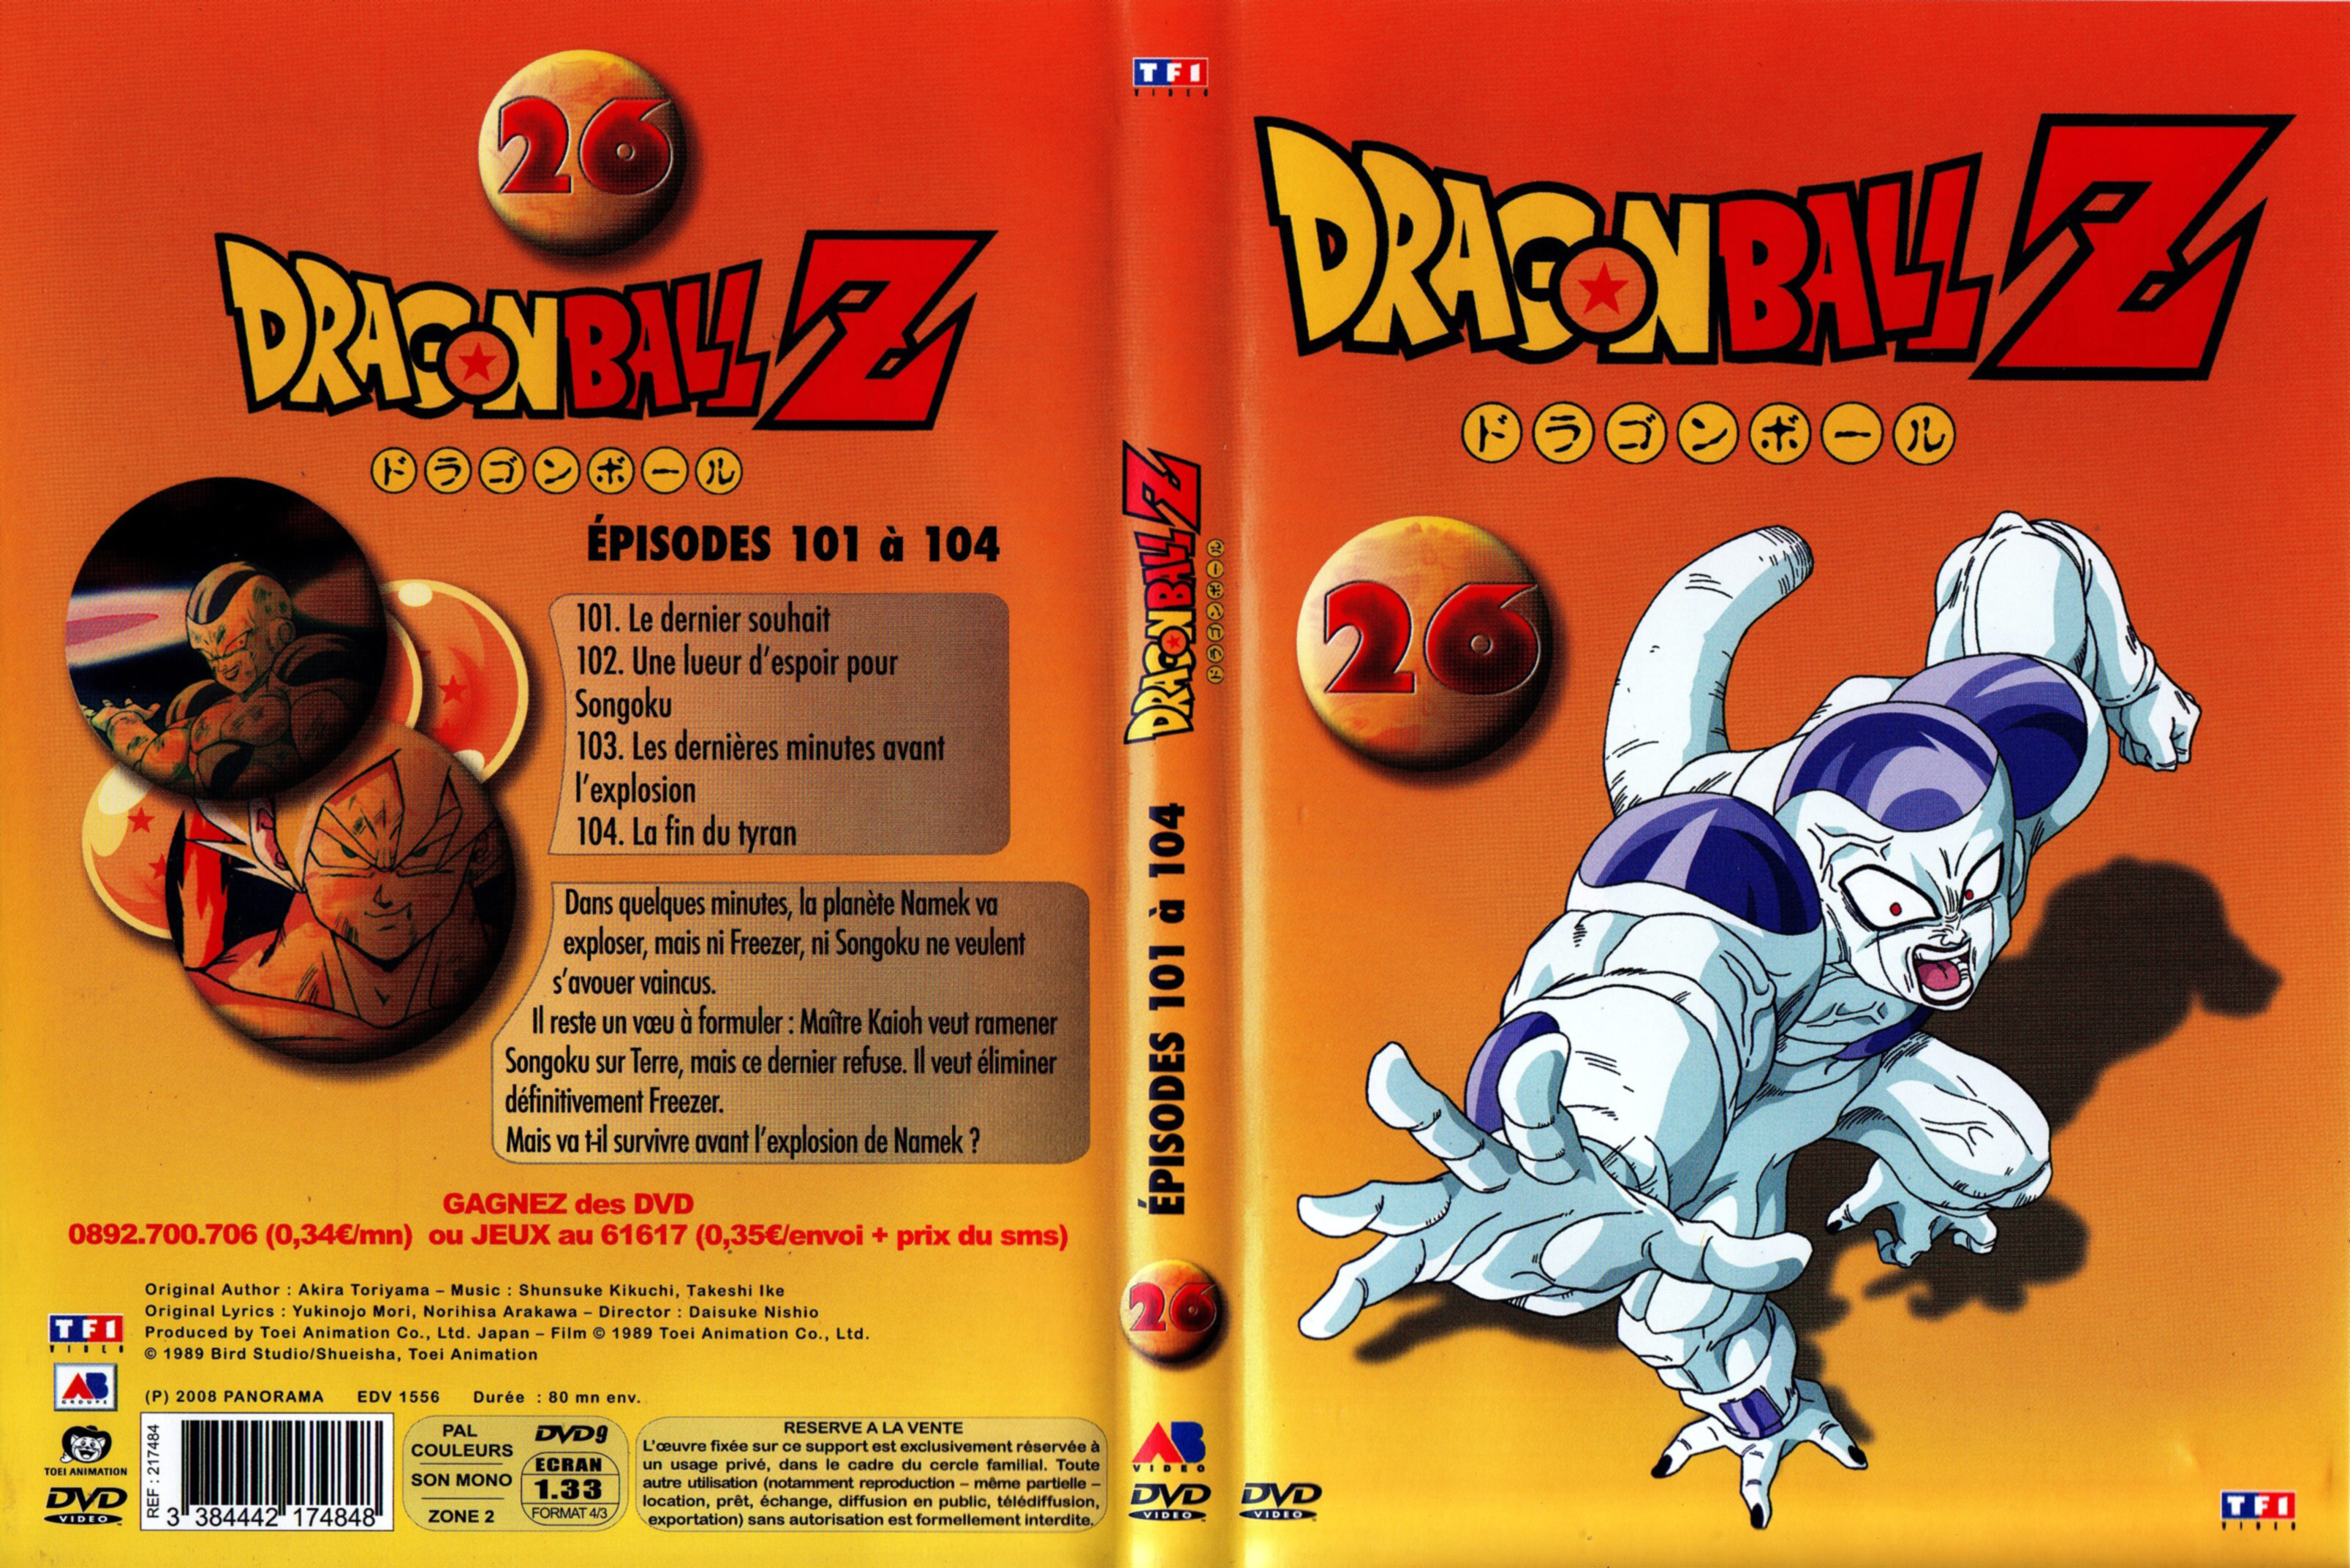 Jaquette DVD Dragon Ball Z vol 26